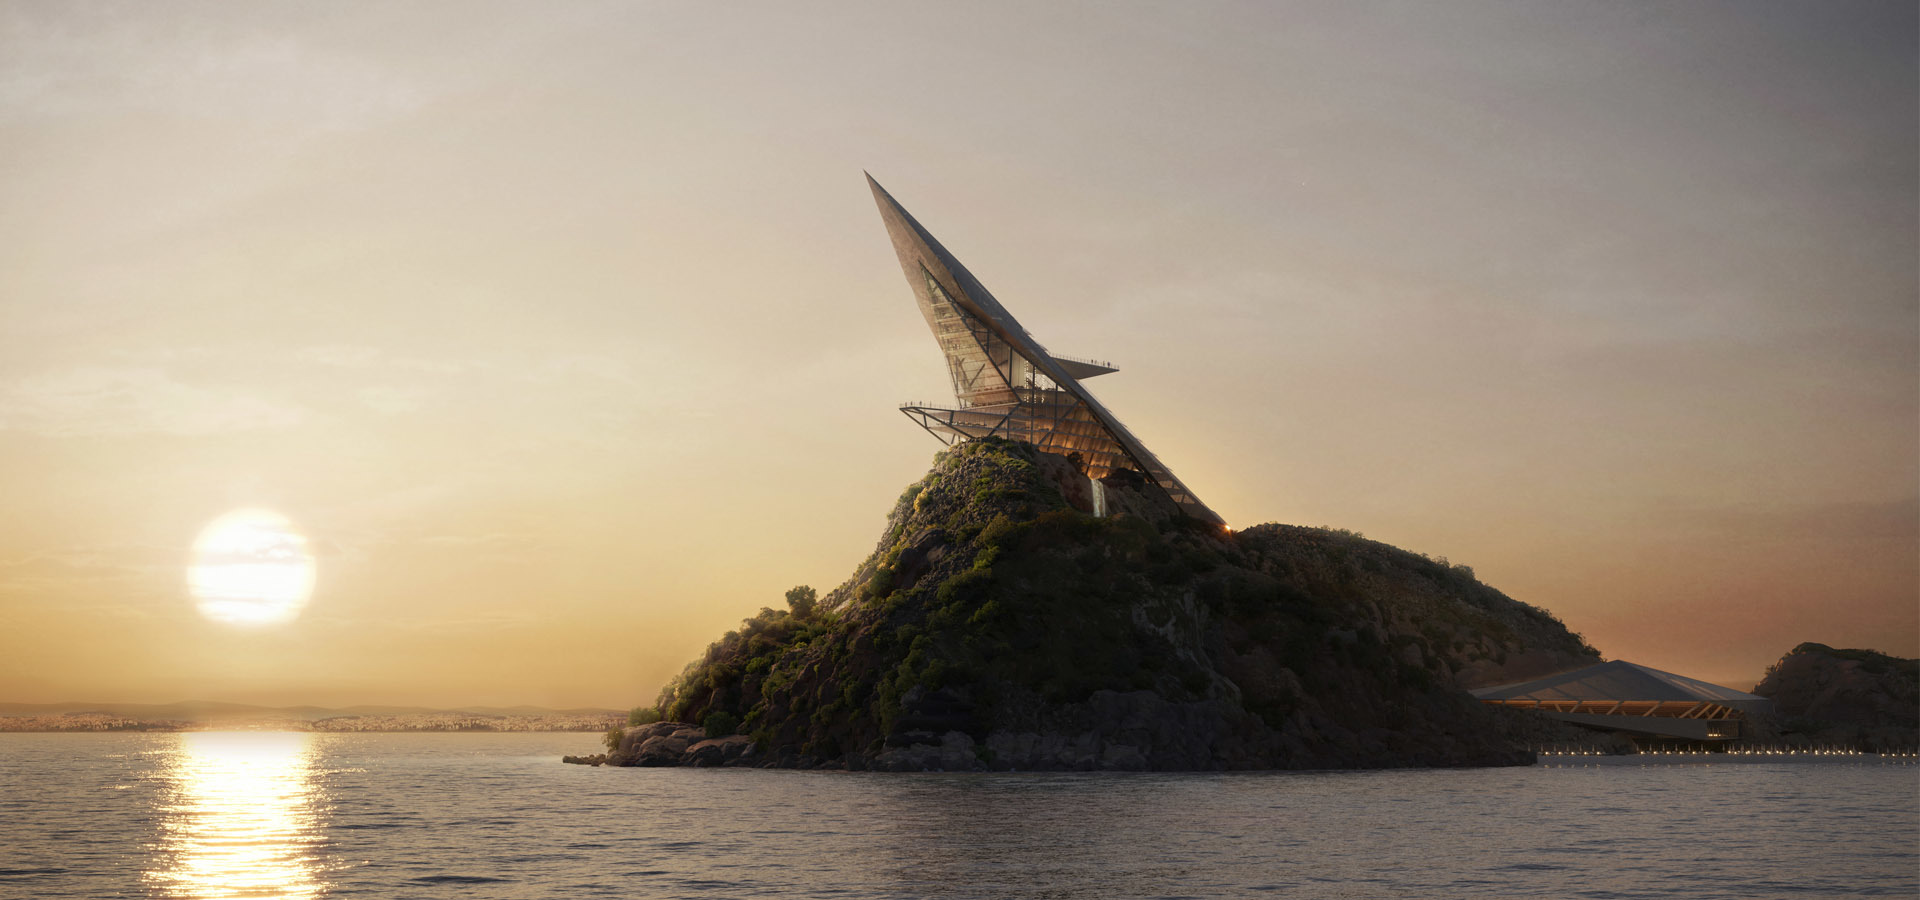 UHA Sivriada Island Icon Istanbul Turkey Architectural Render